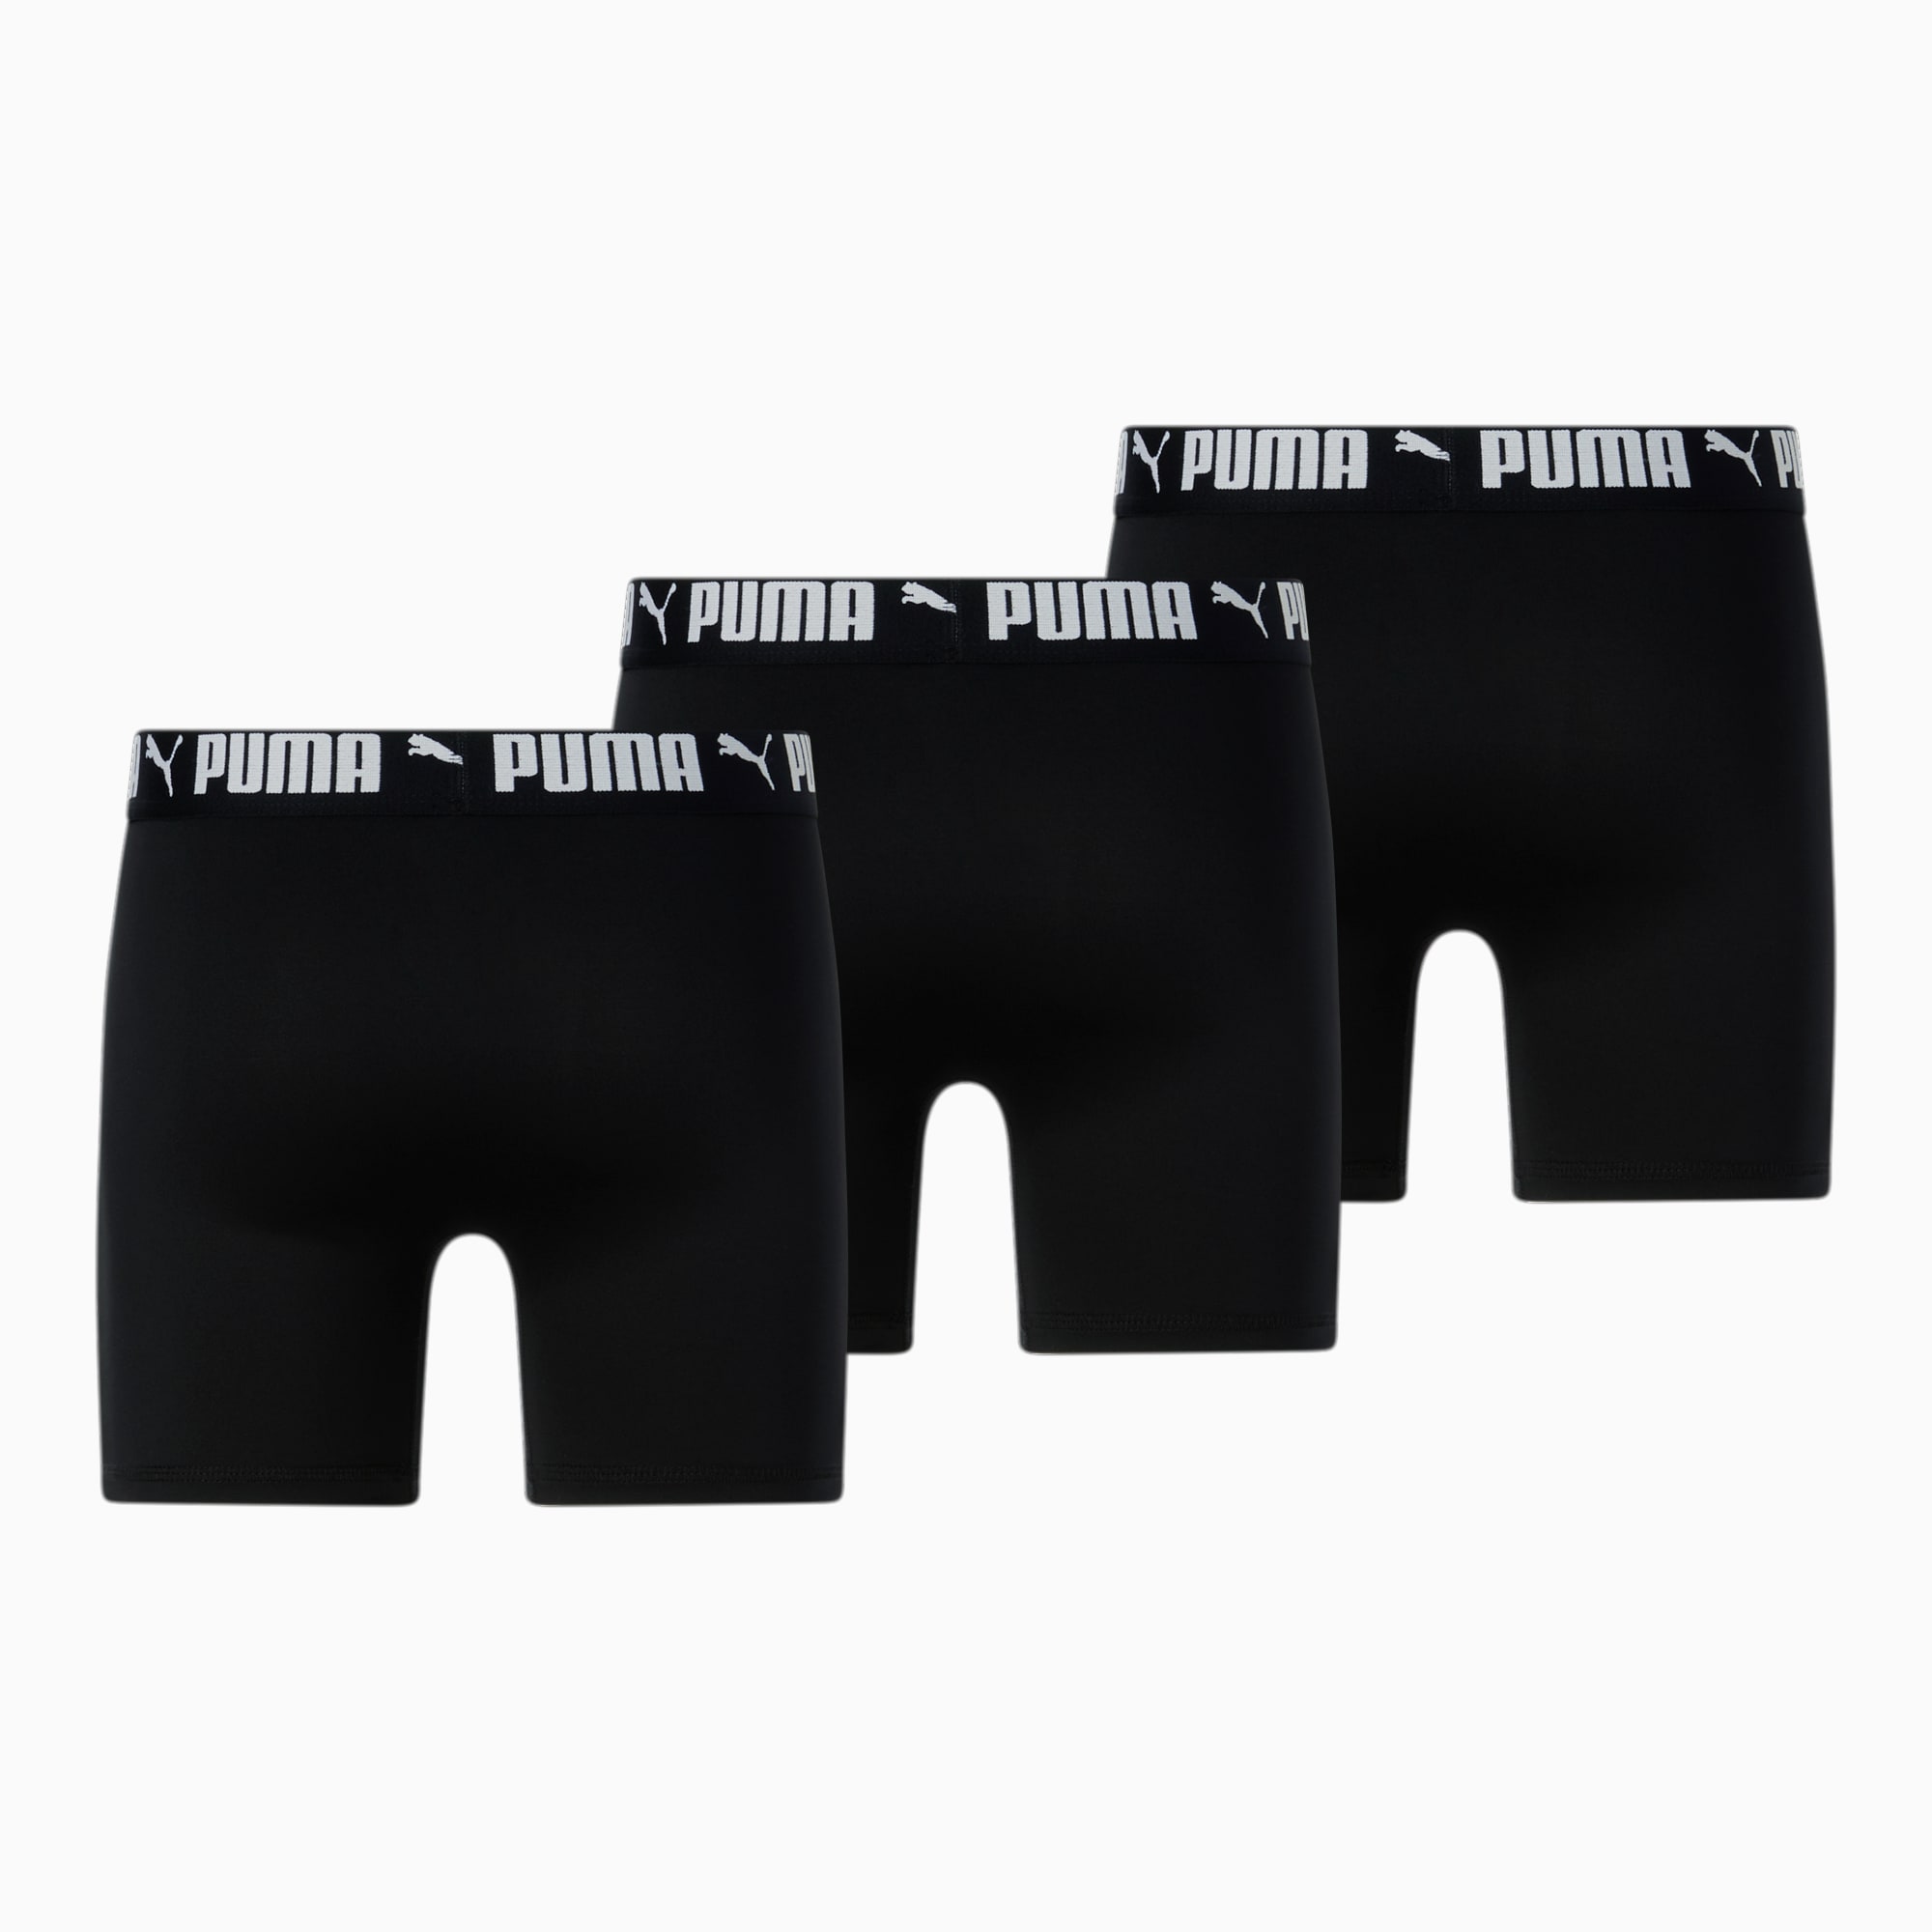 Emporio Armani Men's 3-Pack Cotton Brief, Black, Small : :  Clothing, Shoes & Accessories